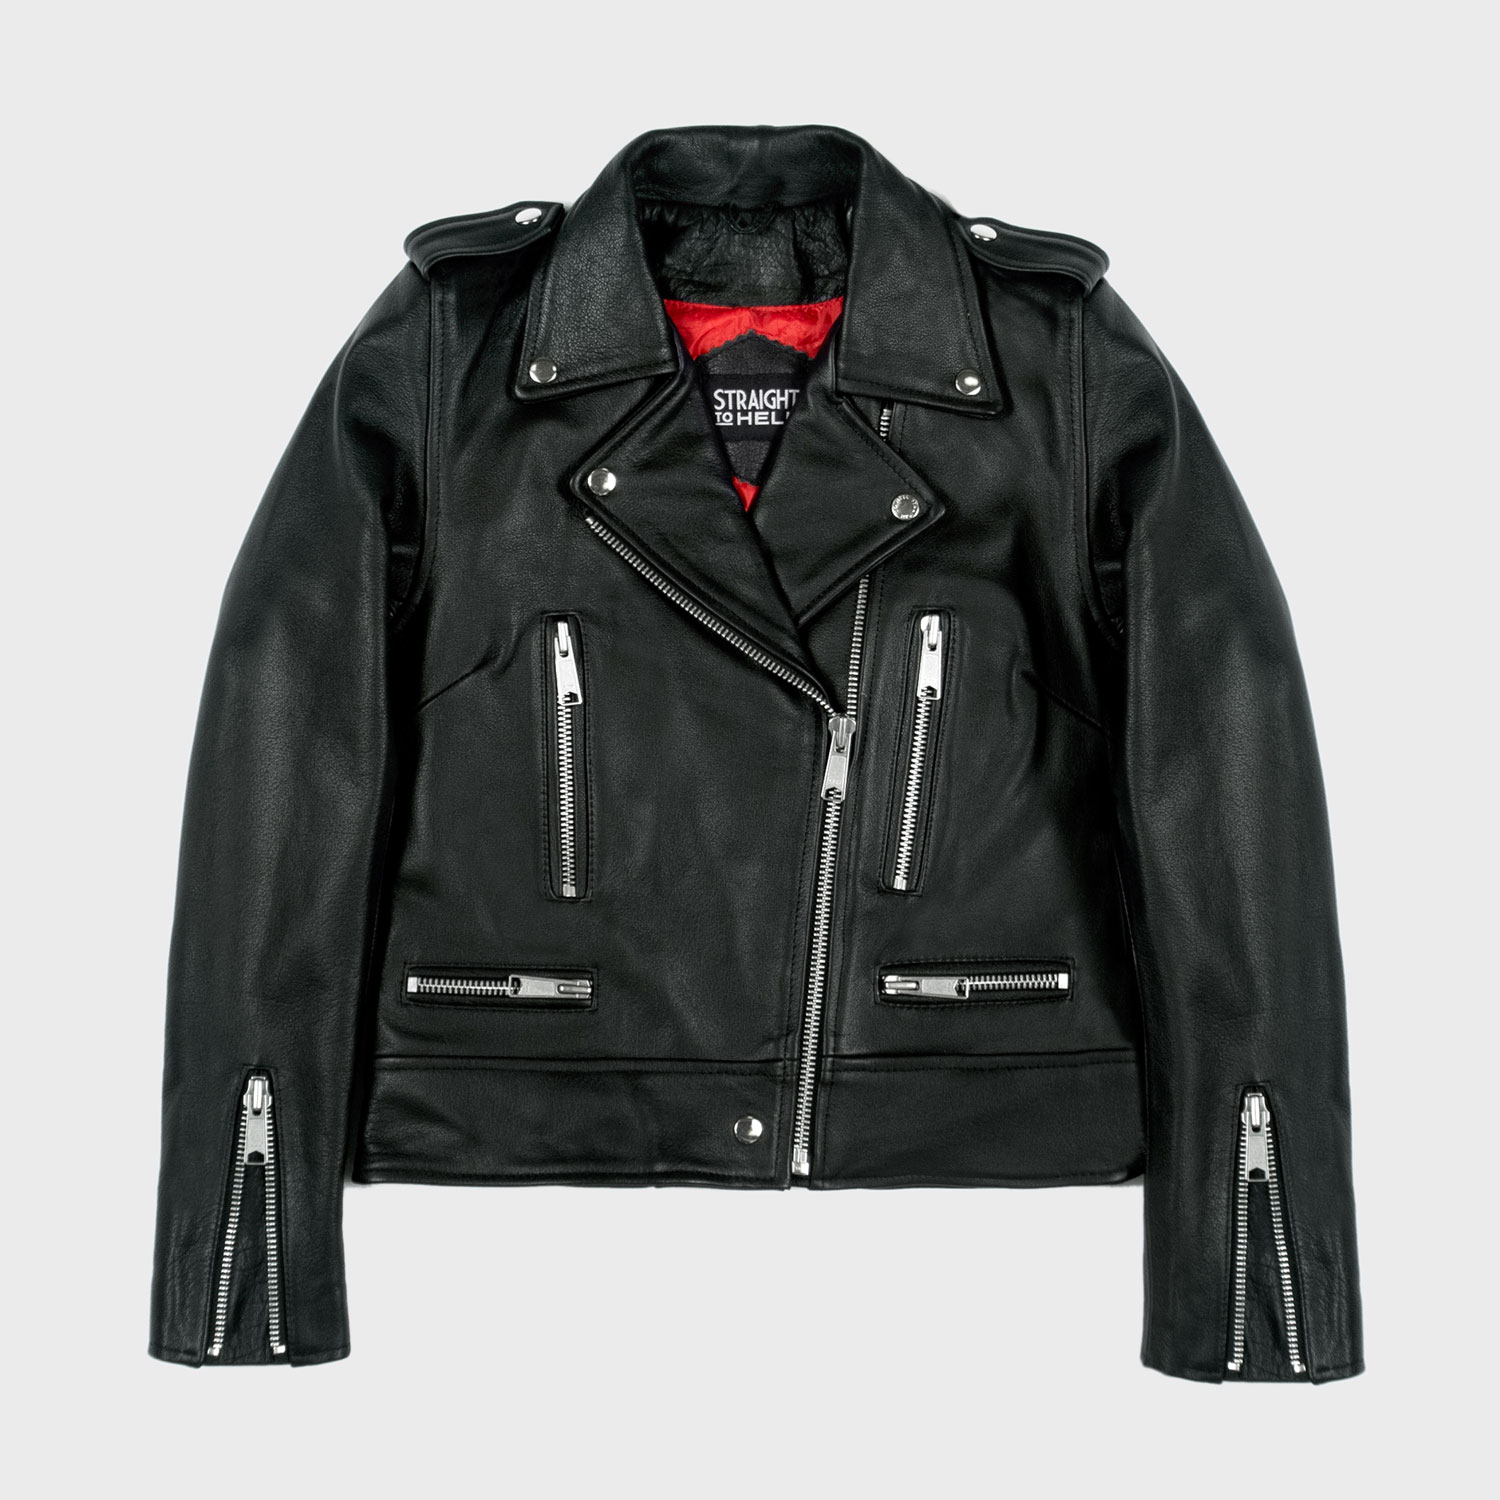 Vincent - Leather Jacket (Size XS, S, M, L, XL, 2XL, 3XL, 4XL, 5XL